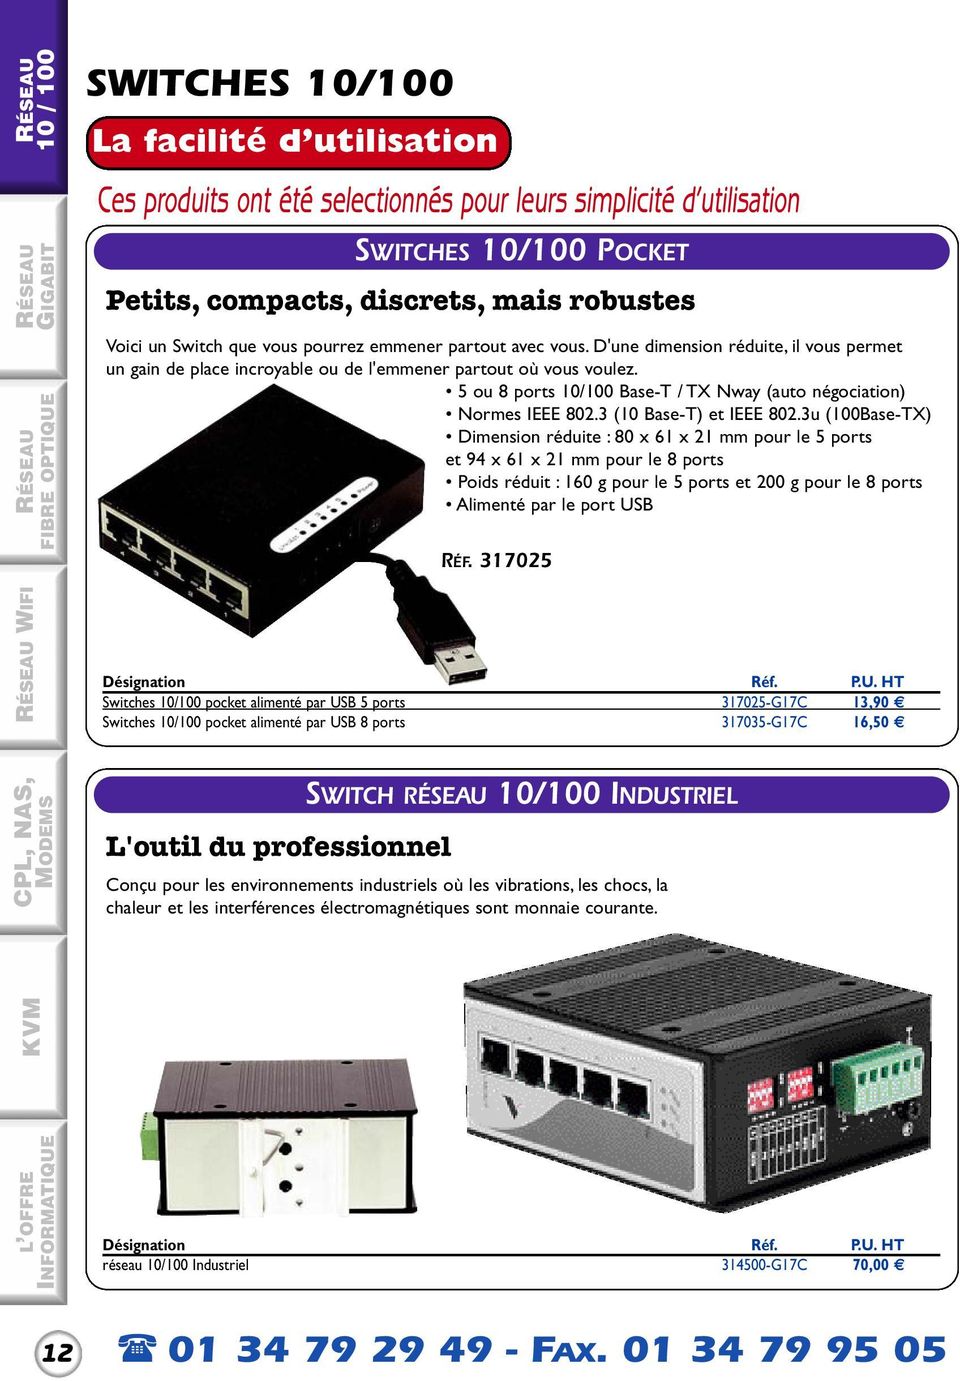 5 ou 8 ports 10/100 Base-T / TX Nway (auto négociation) Normes IEEE 802.3 (10 Base-T) et IEEE 802.